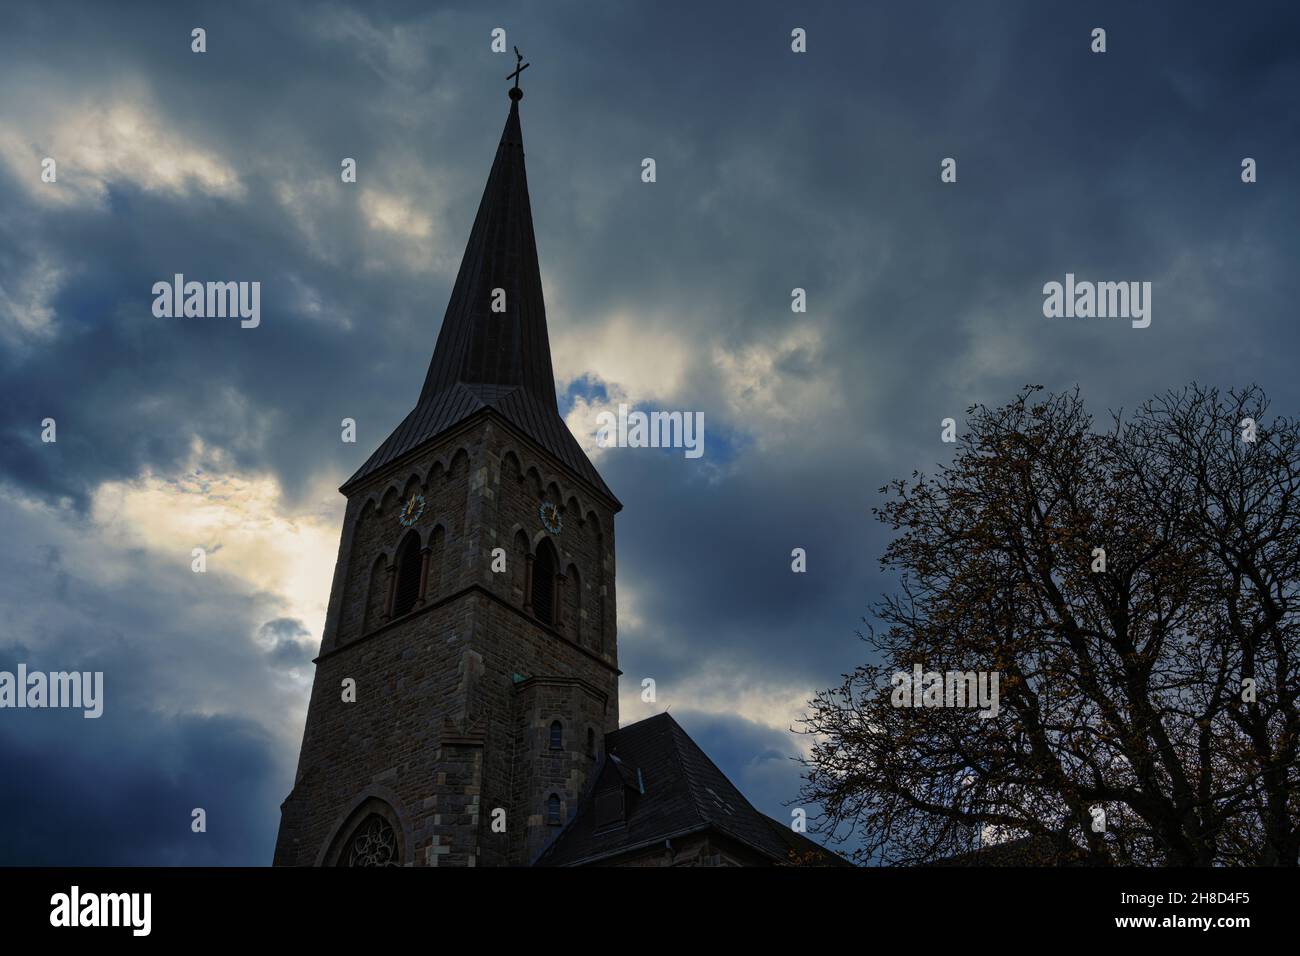 church spire in Essen Heisingen in front of a cloudy sky at dusk. Stock Photo